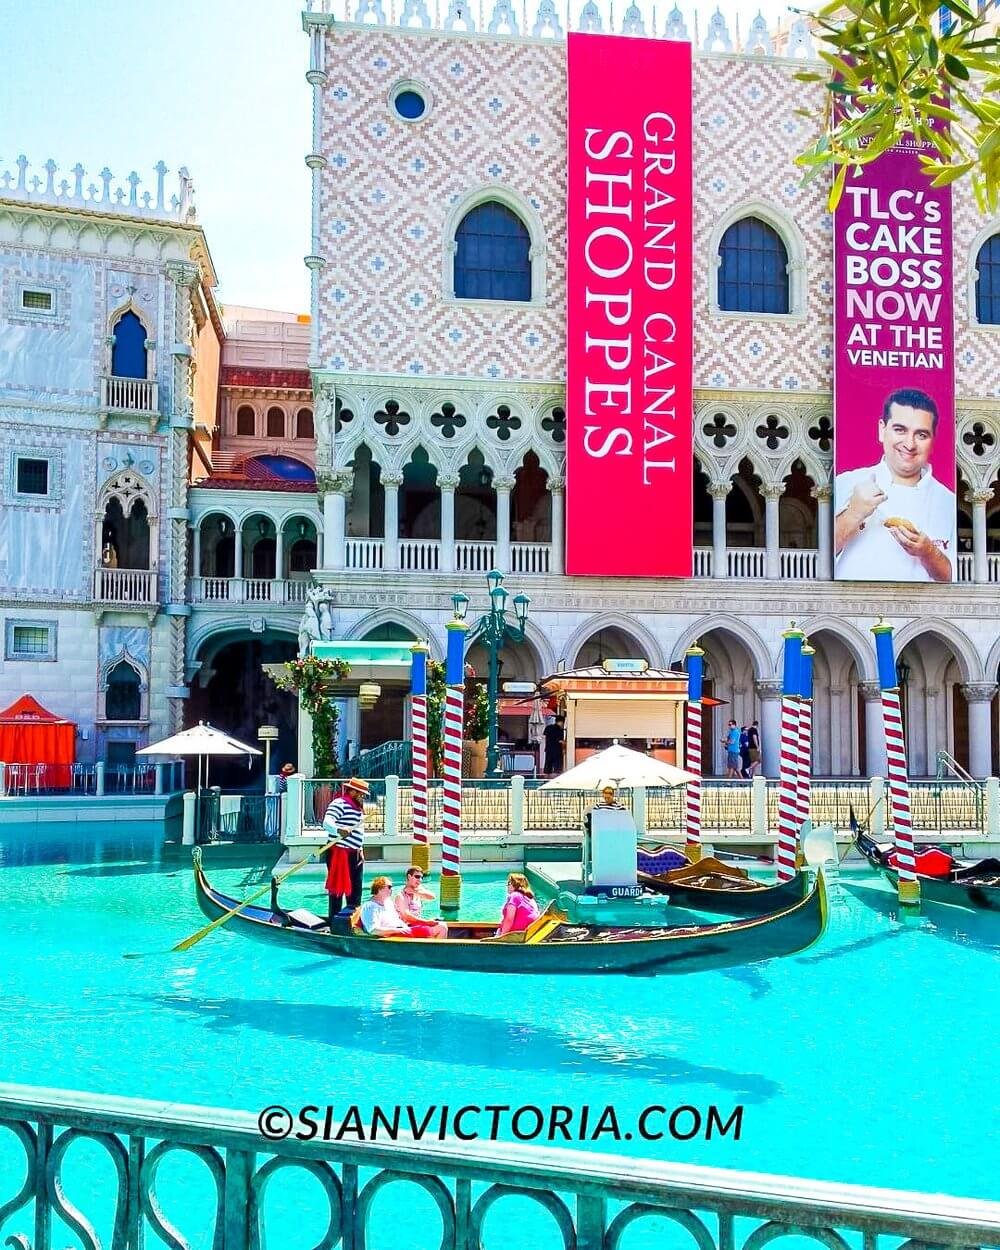 Sian-Victoria-The-Venetian-resort-hotel-las-vegas-nevada-italian-themed-gondola-ride-sightseeing-tourist-attraction-america-usa+(1).jpg